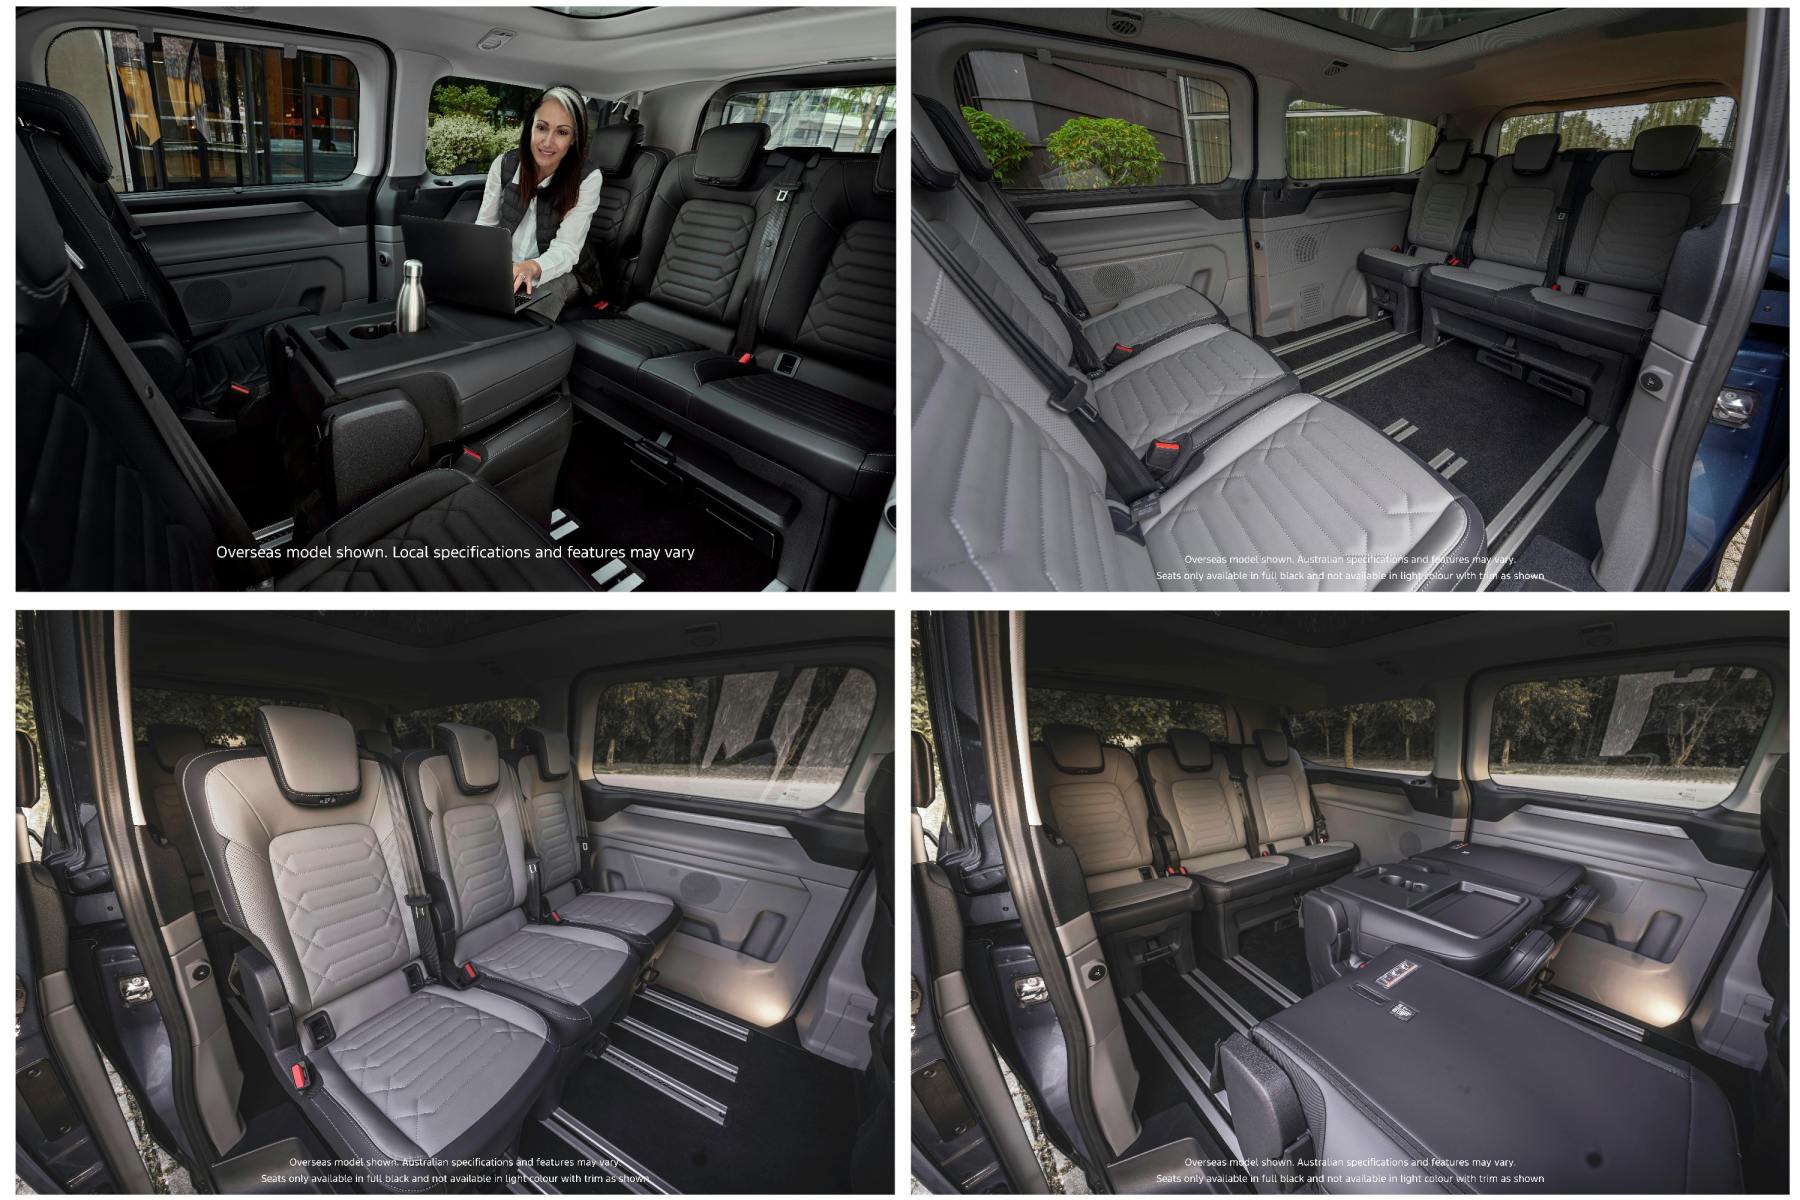 Ford Tourneo Titanium X internal seat layout 4 pic collage